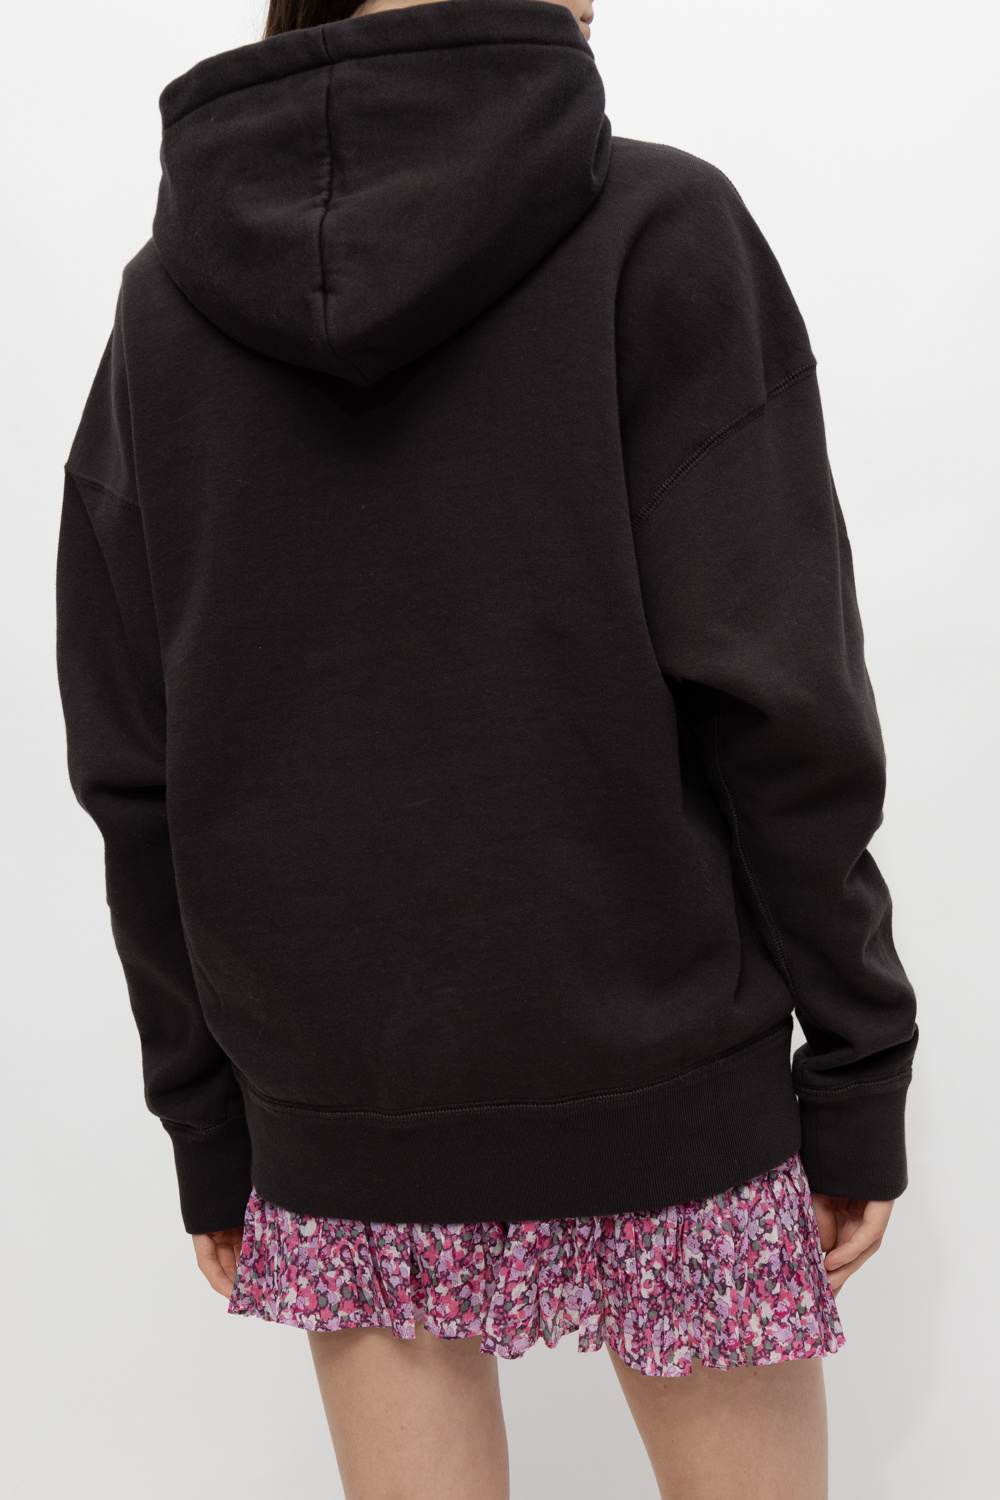 versace kids medusa print crewneck t shirt item ‘Mansel’ hoodie